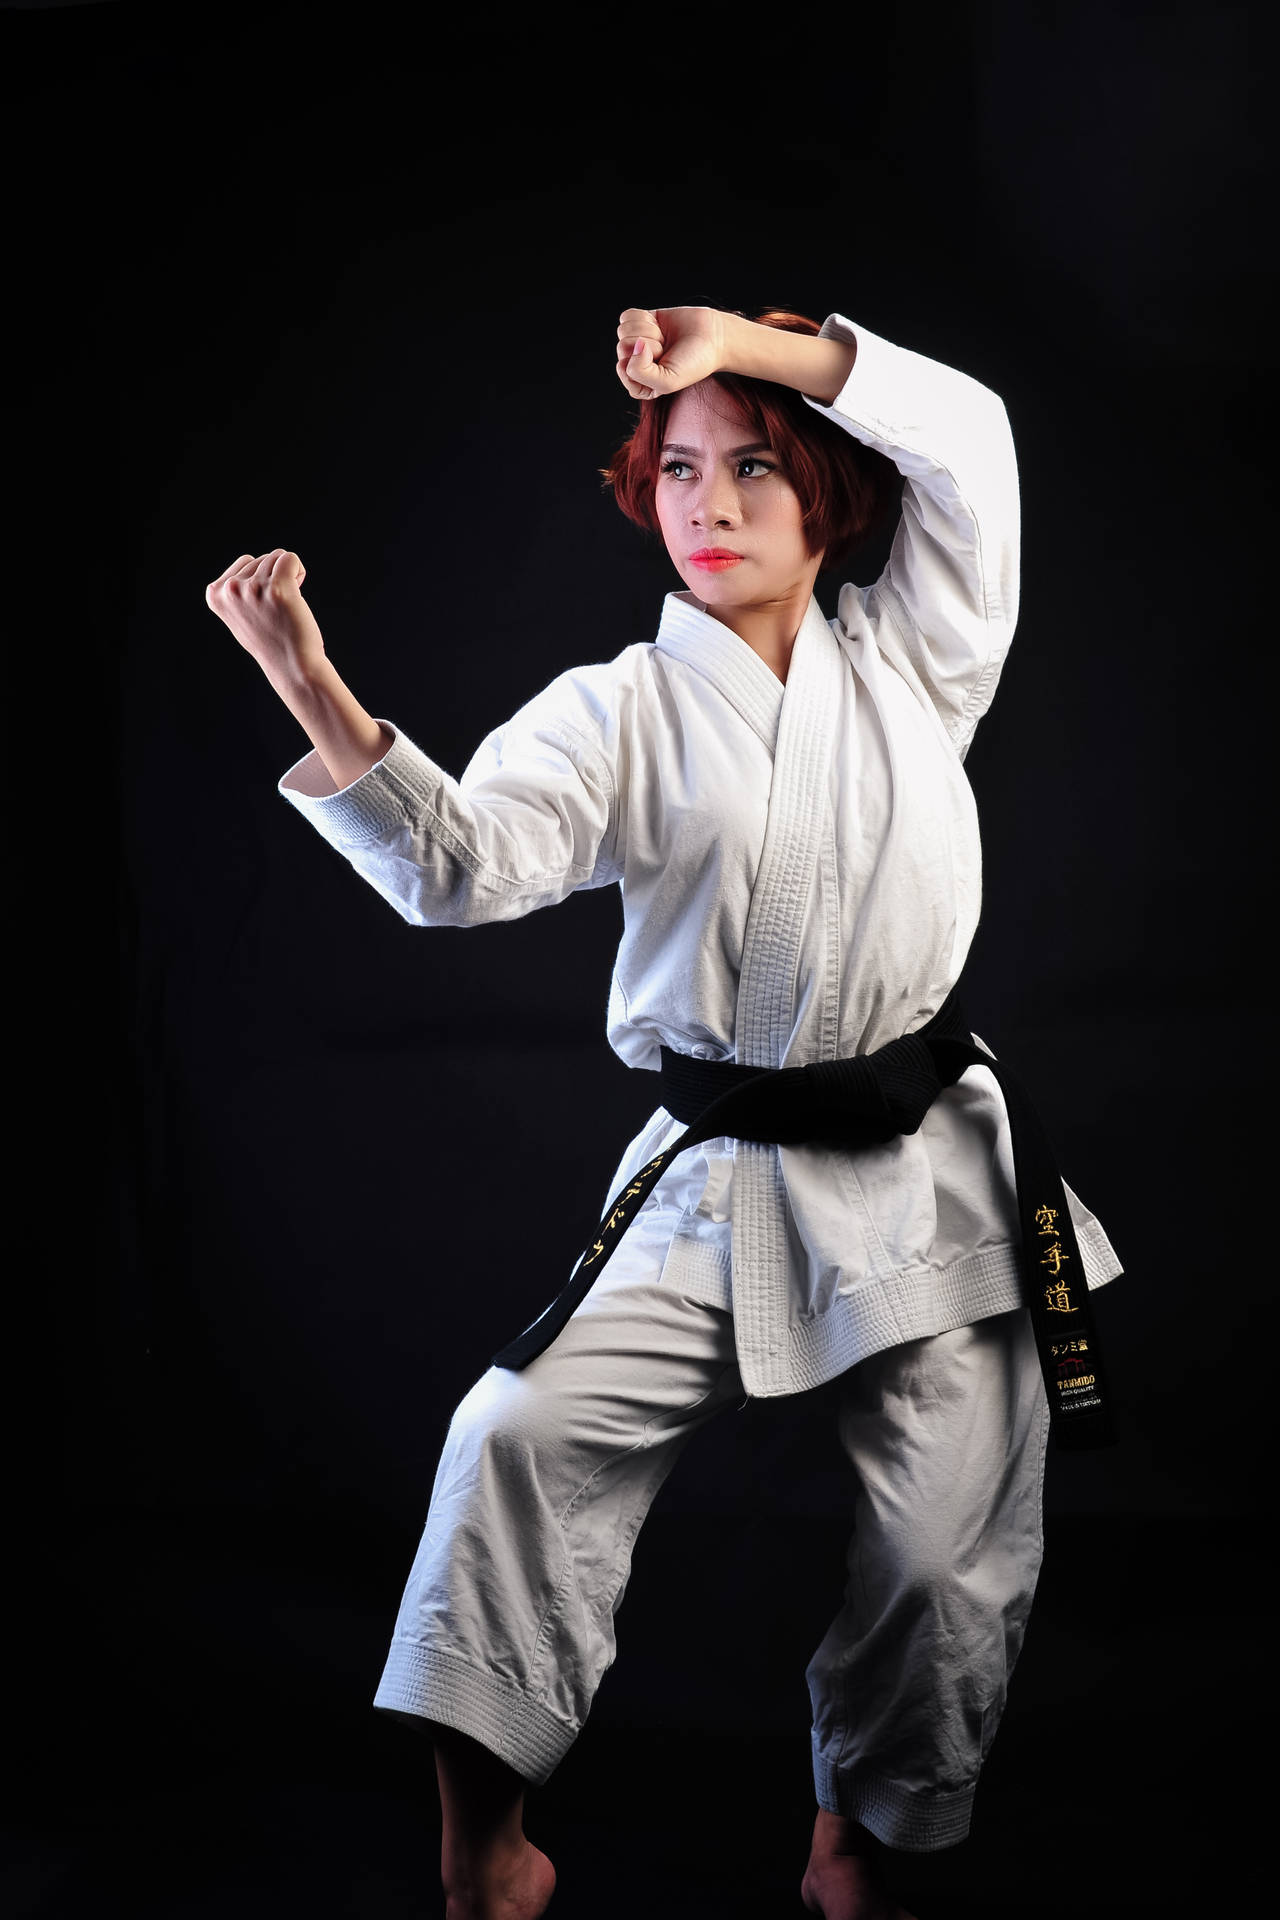 Female Judo Performer Background